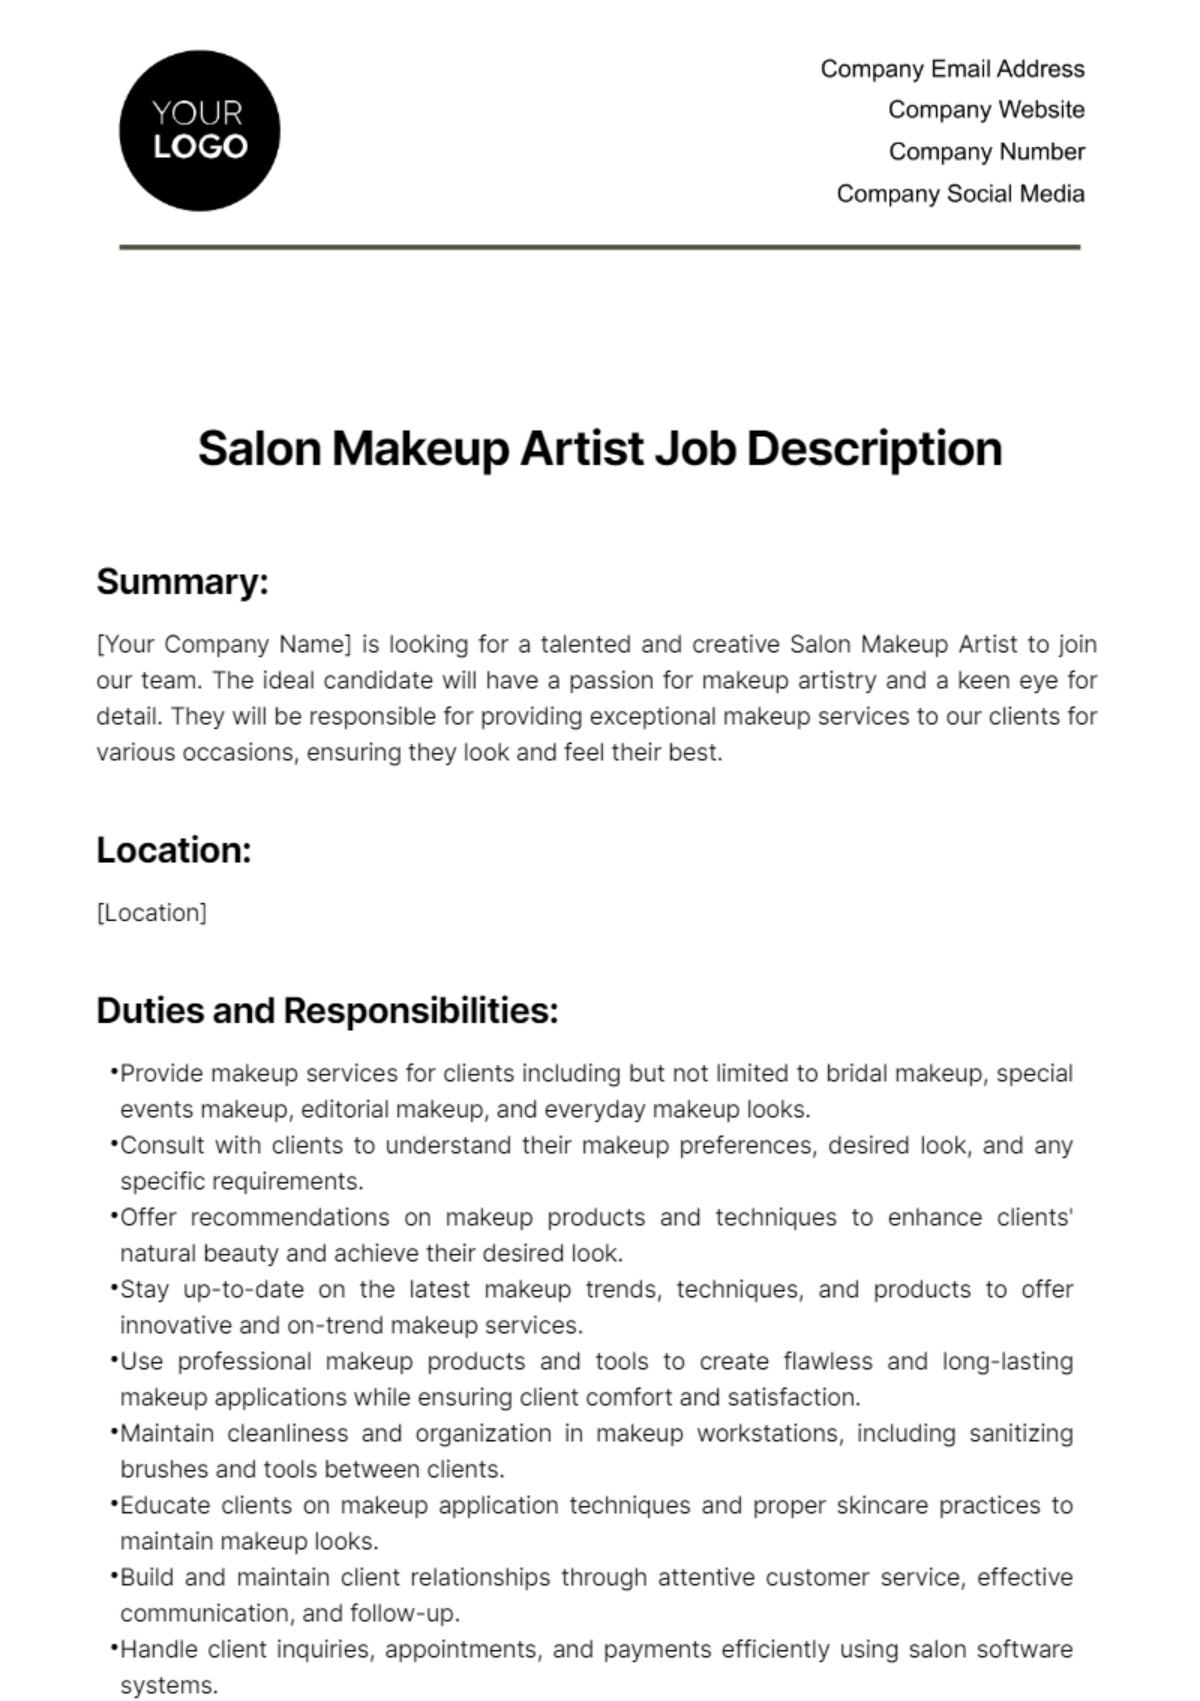 Salon Makeup Artist Job Description Template